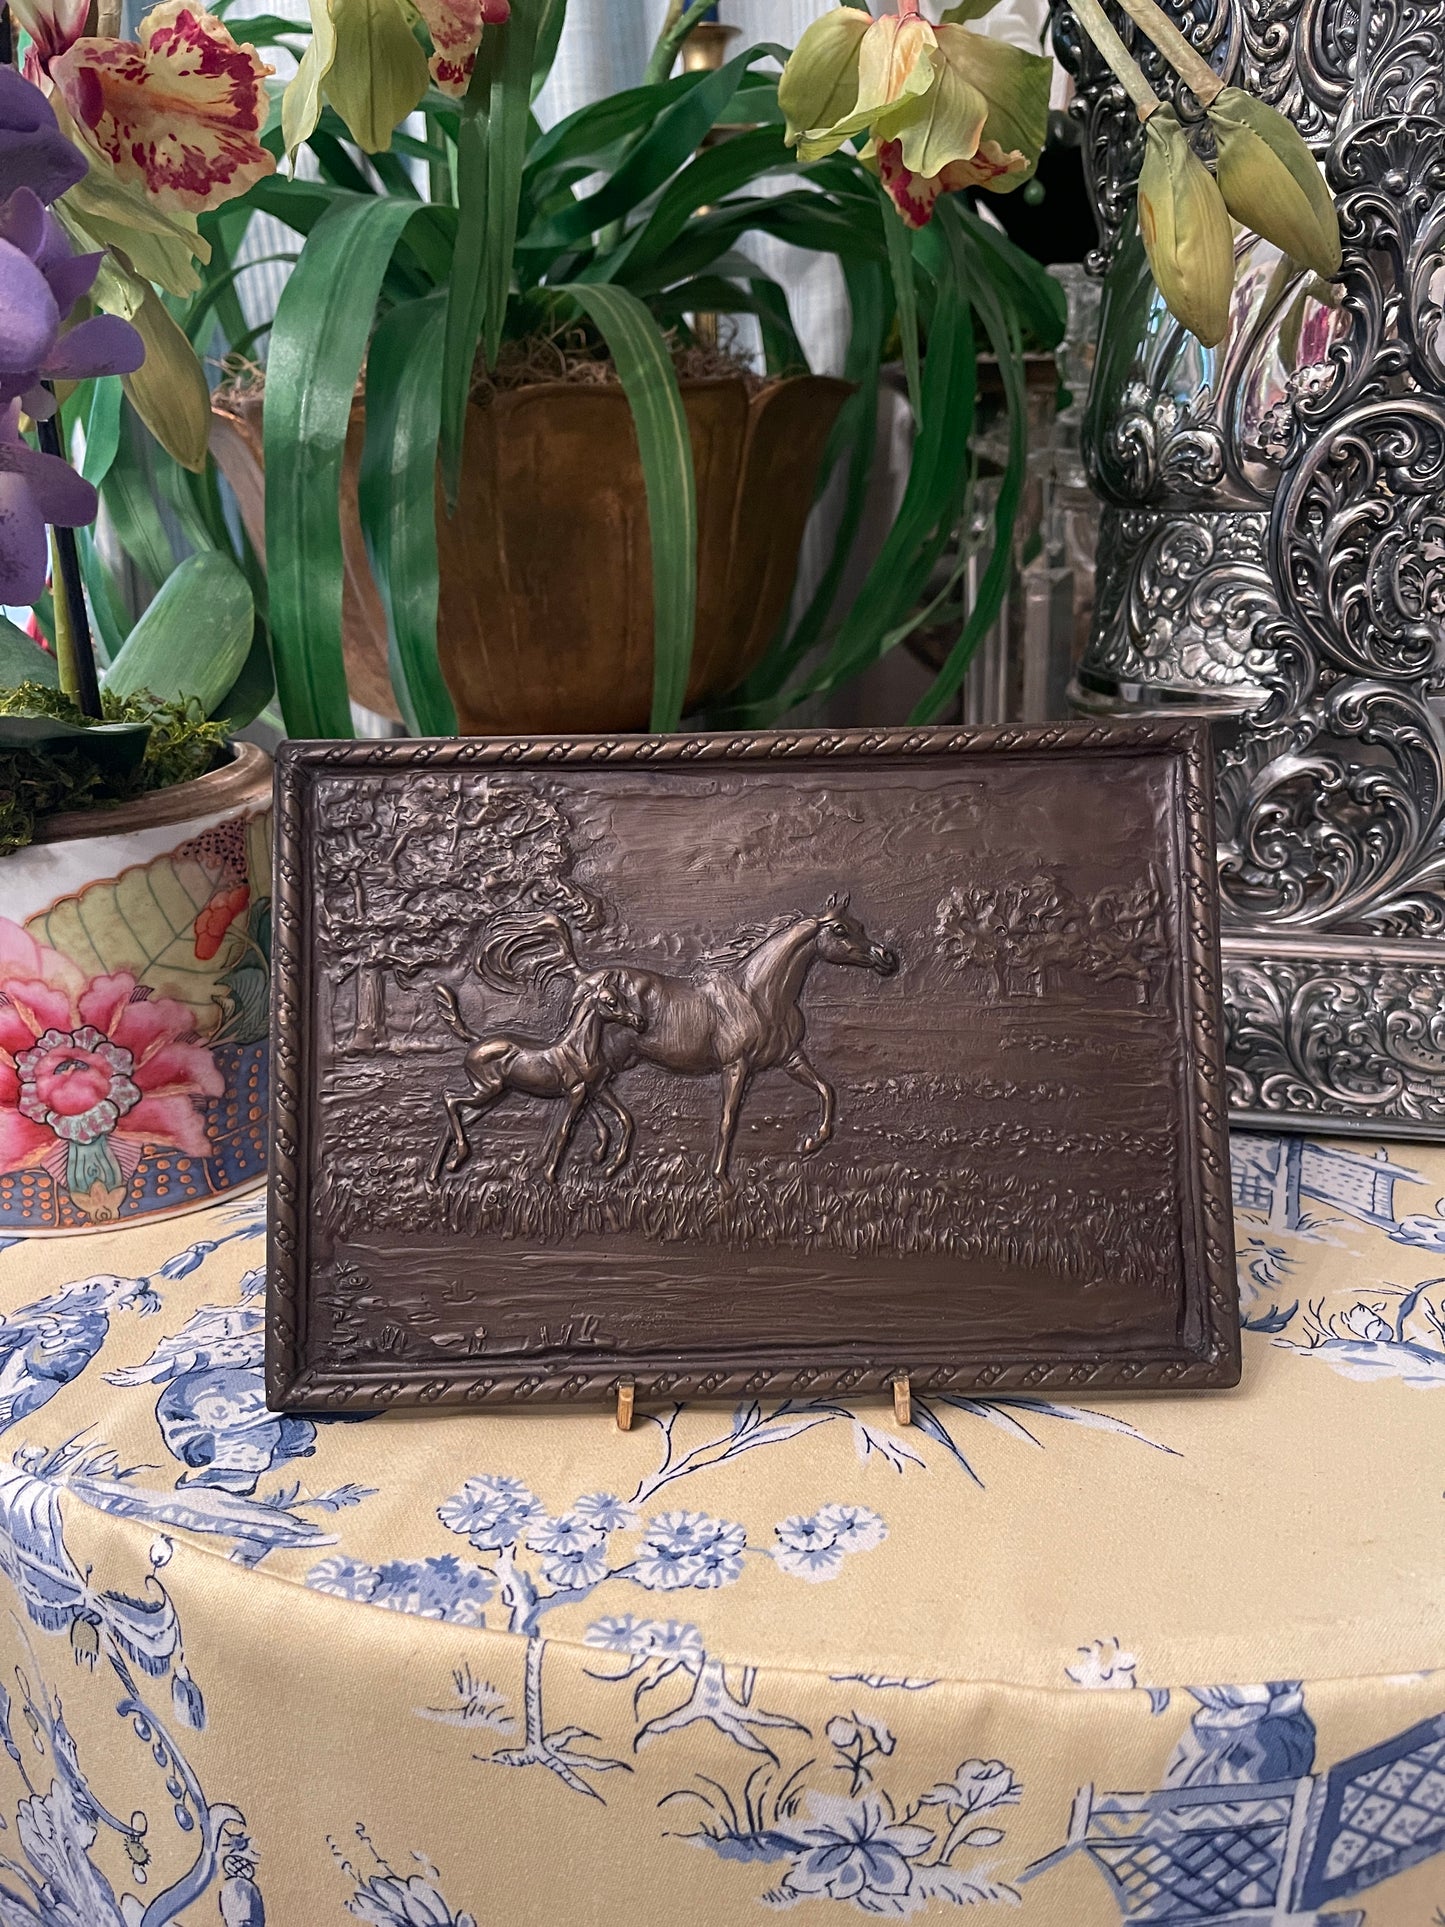 Cast Bronze Arabian Horse Plaque by Karen Kasper, Artist Signed